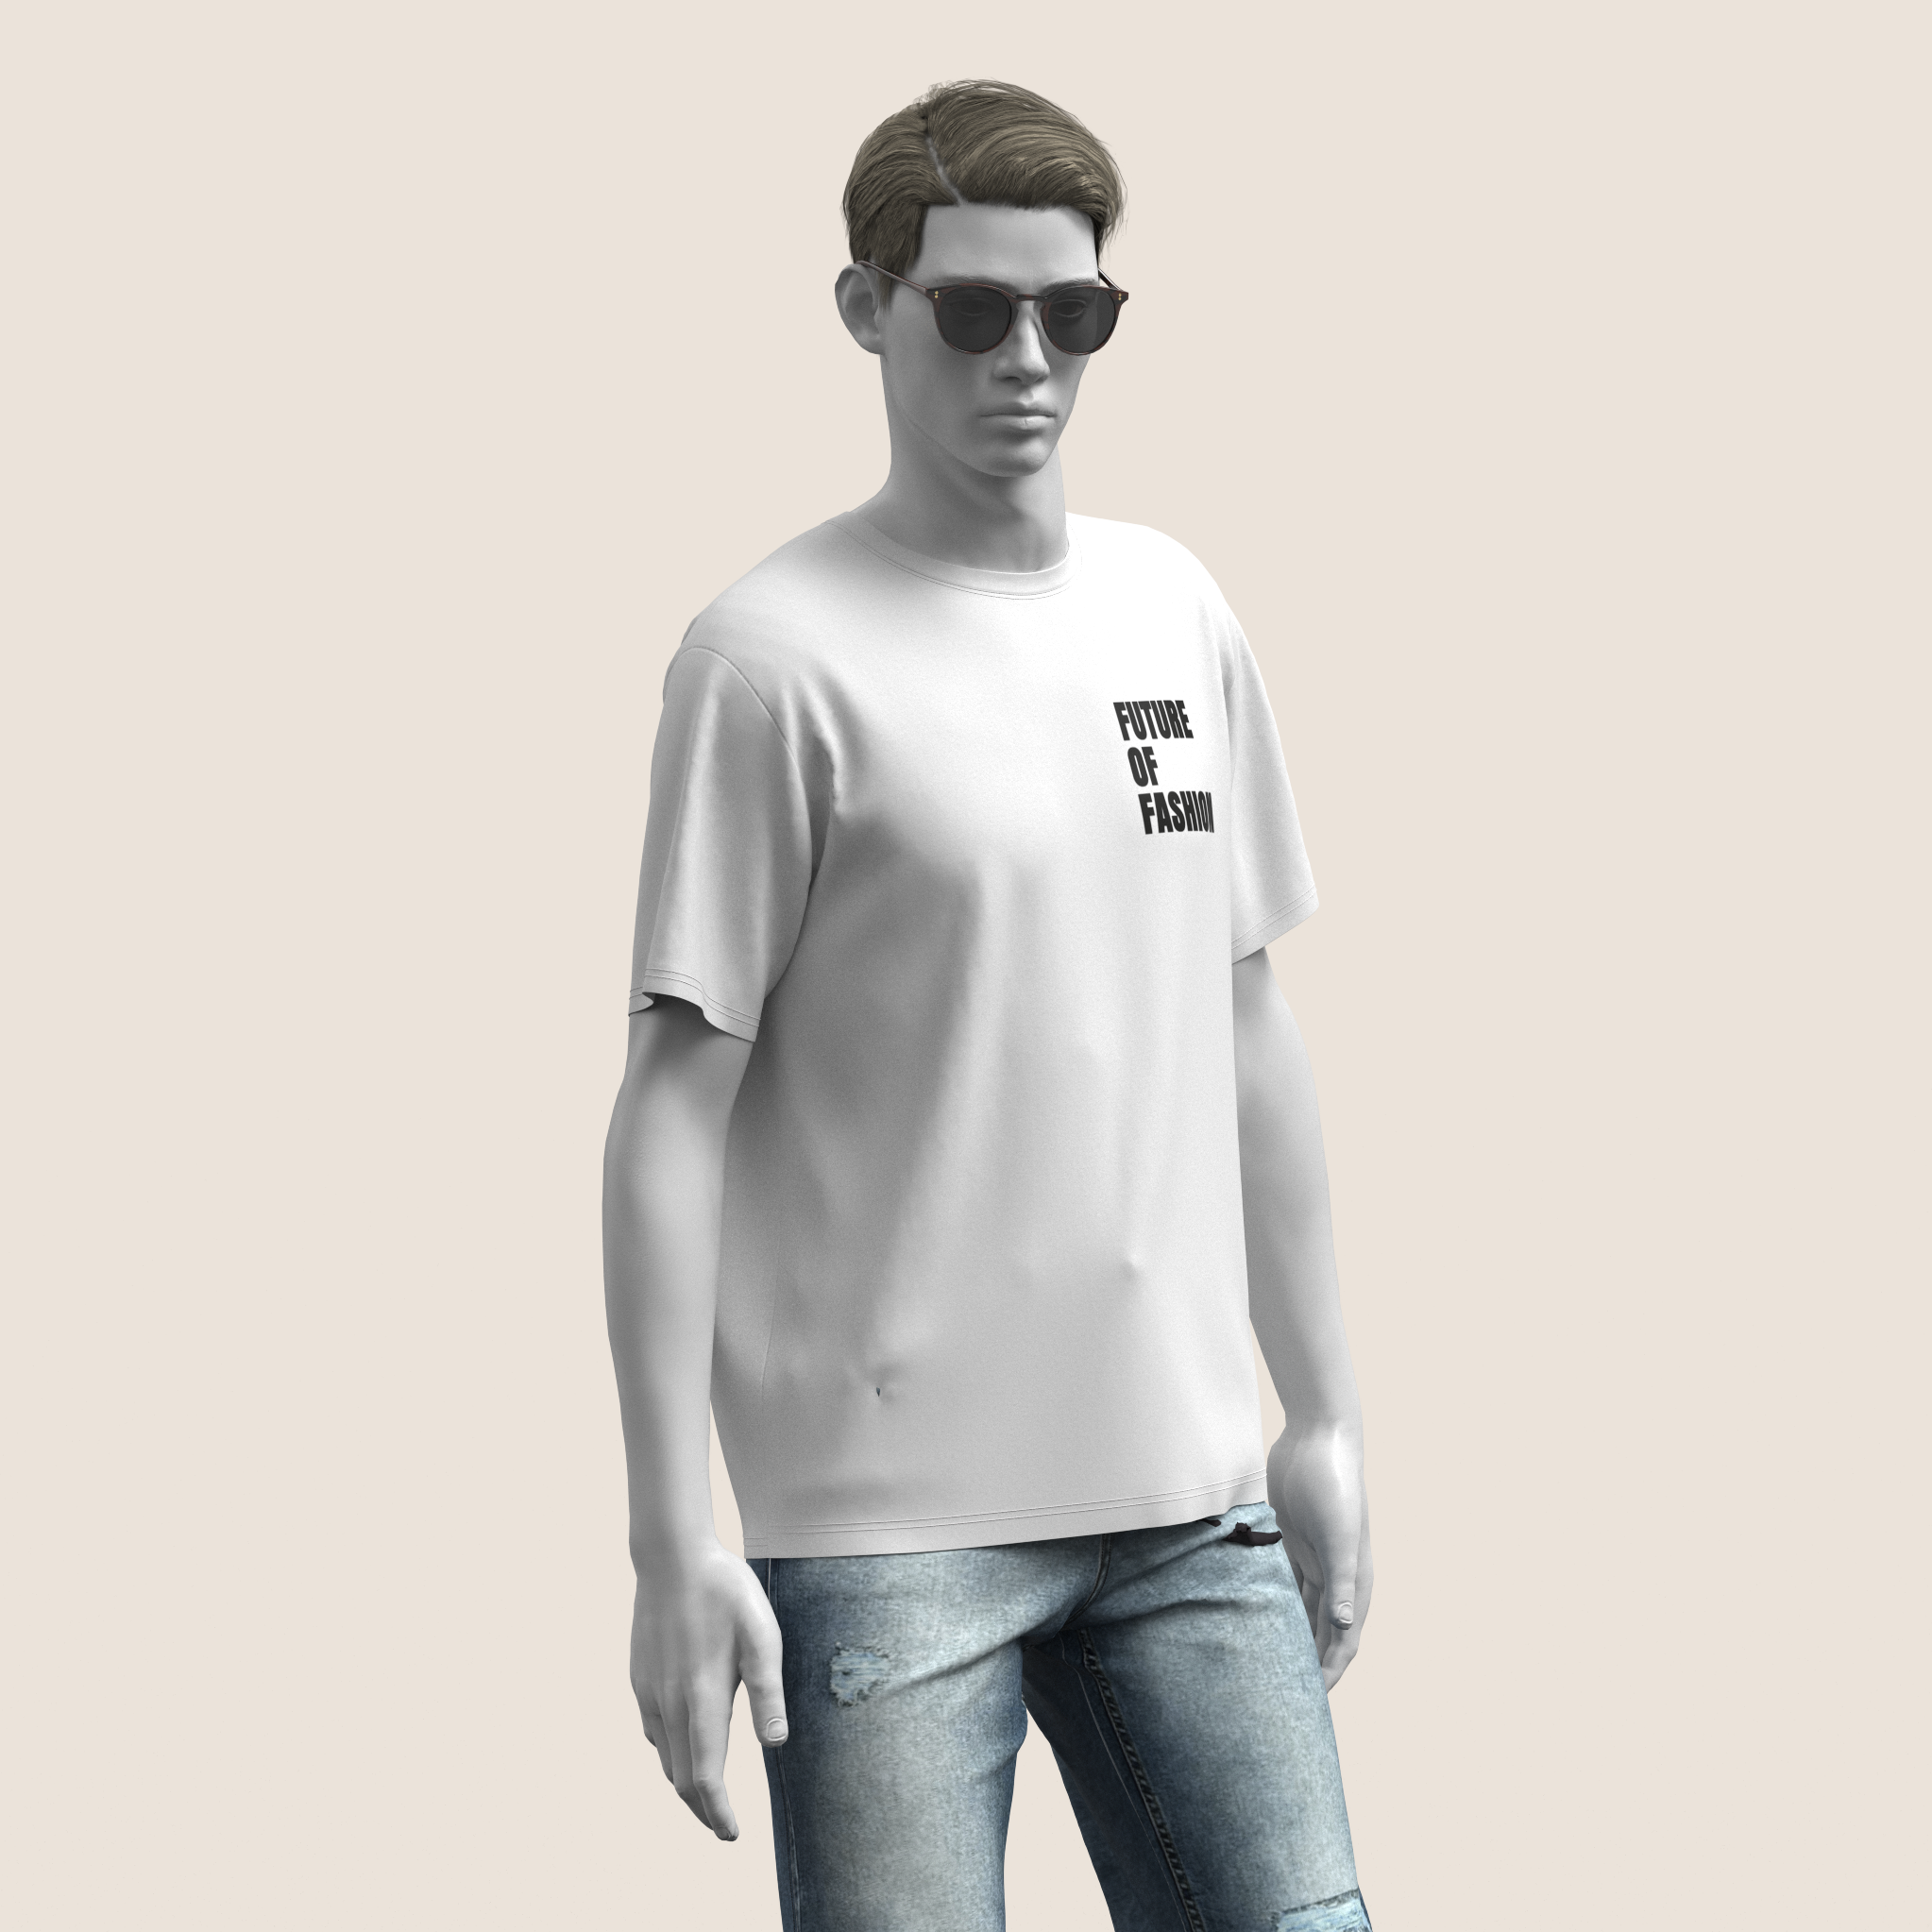 Dot Com Unisex T-Shirt - White